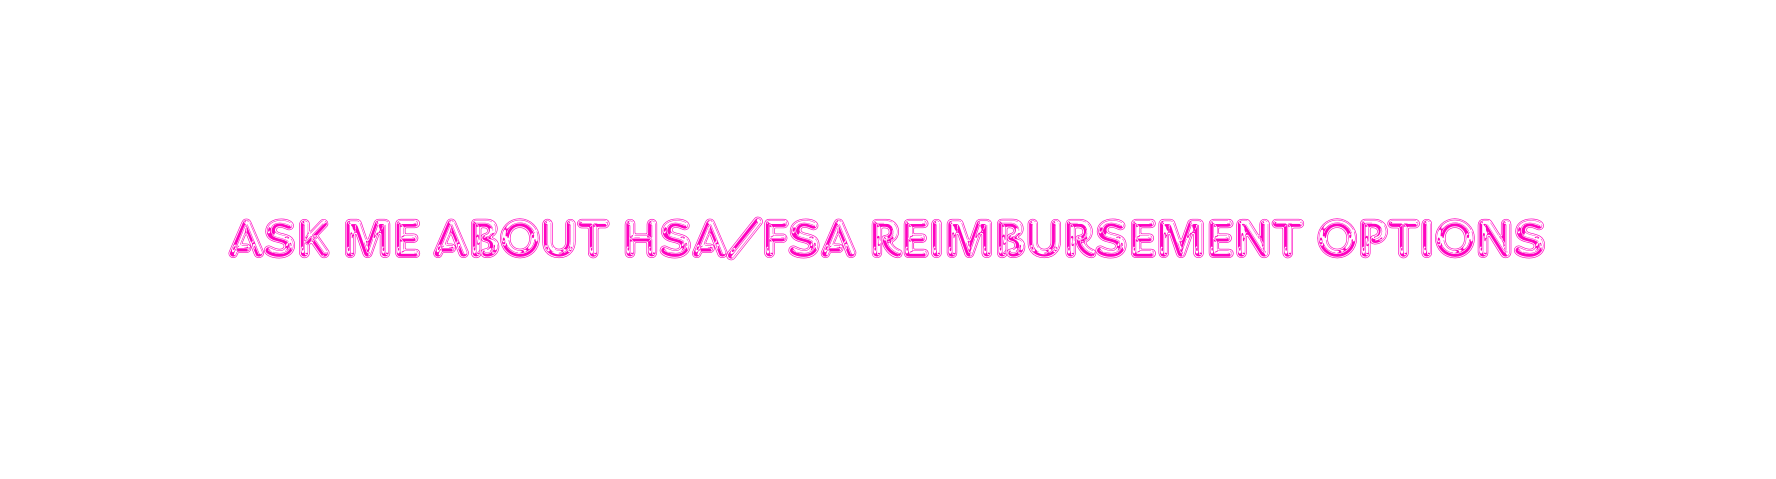 Ask me about HSA FSA reimbursement options